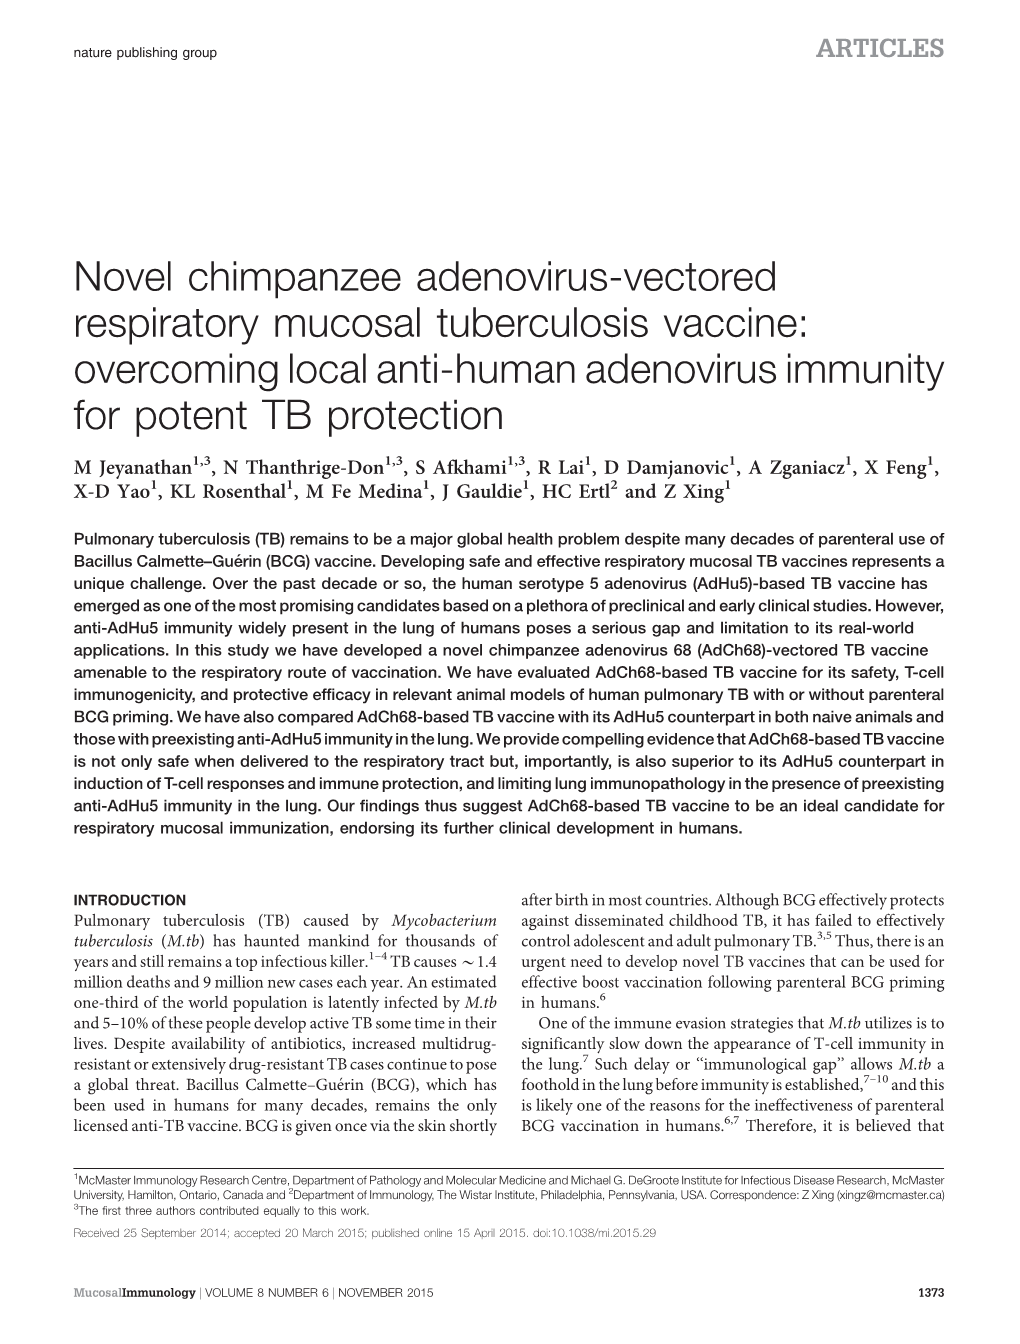 Novel Chimpanzee Adenovirus-Vectored Respiratory Mucosal Tuberculosis Vaccine: Overcoming Local Anti-Human Adenovirus Immunity for Potent TB Protection